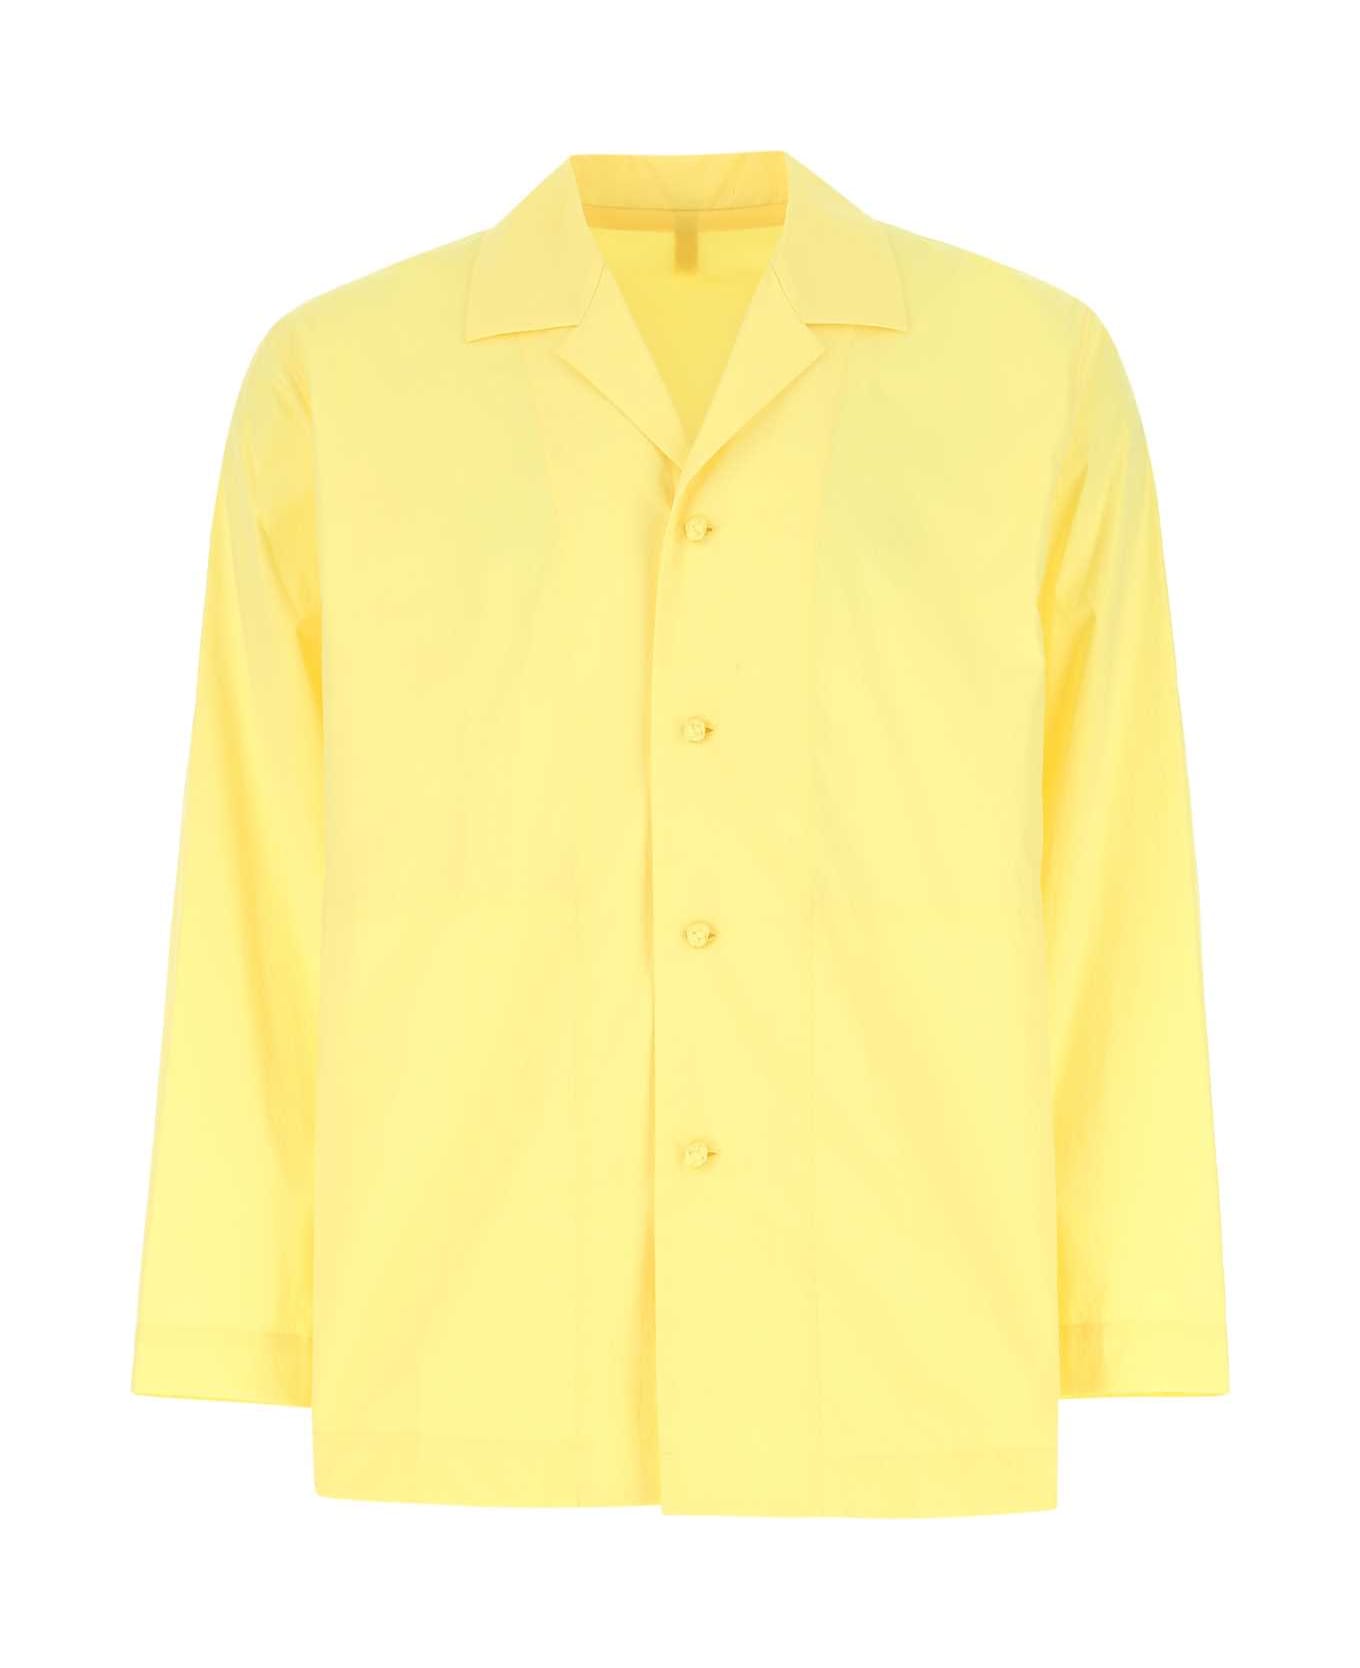 Homme Plissé Issey Miyake Yellow Polyester Shirt - 52 シャツ